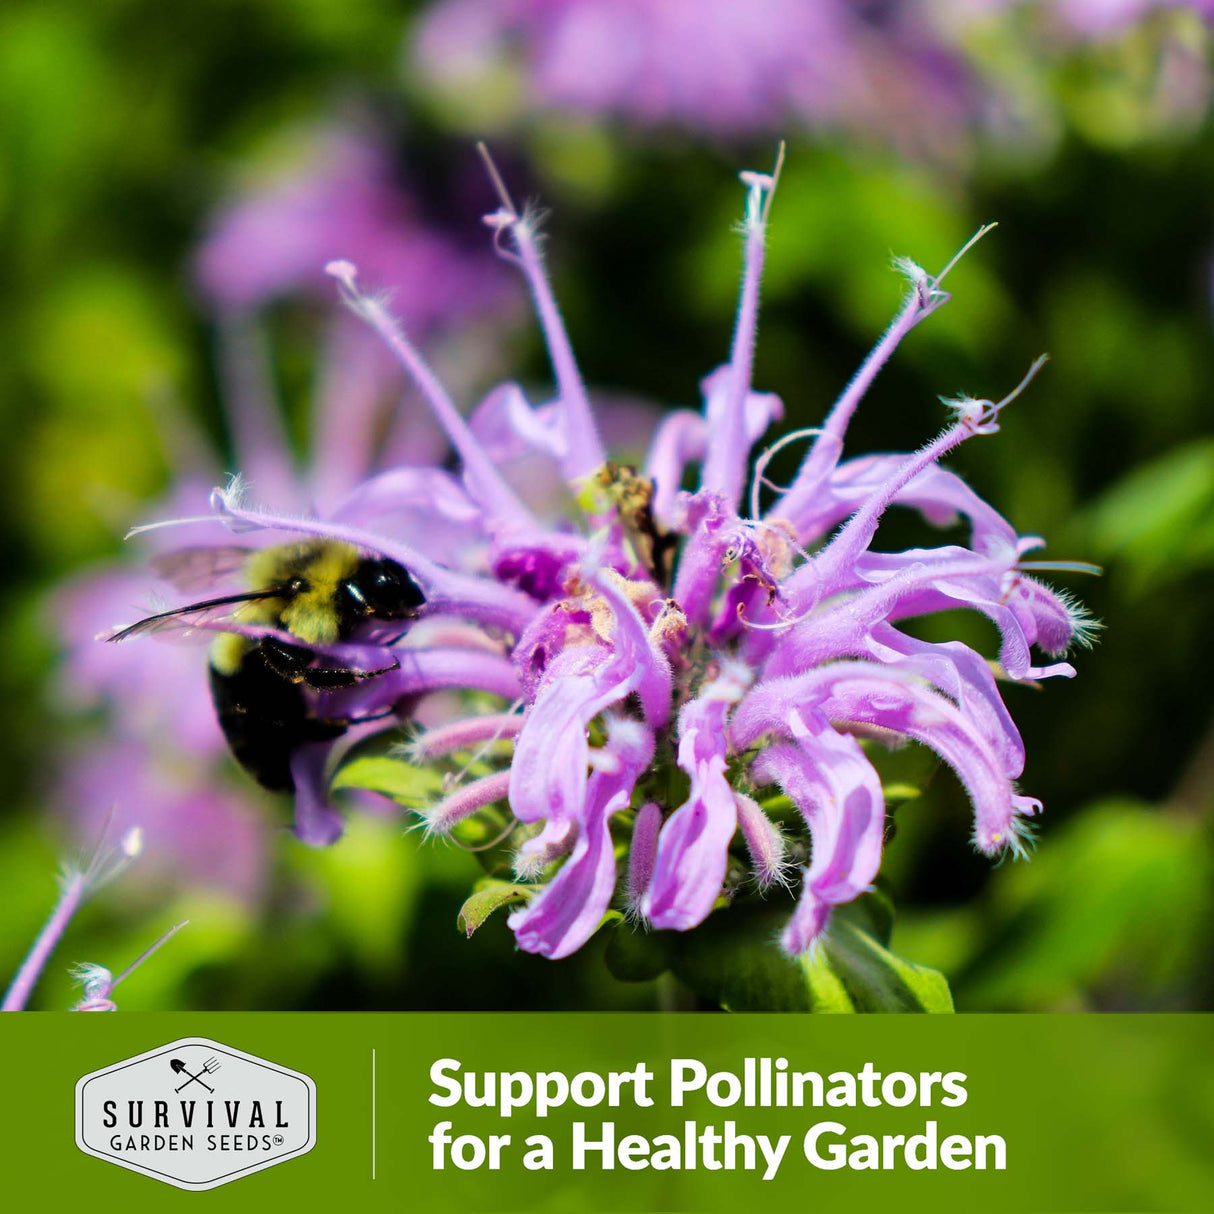 Bergamot supports pollinators for a healthy garden